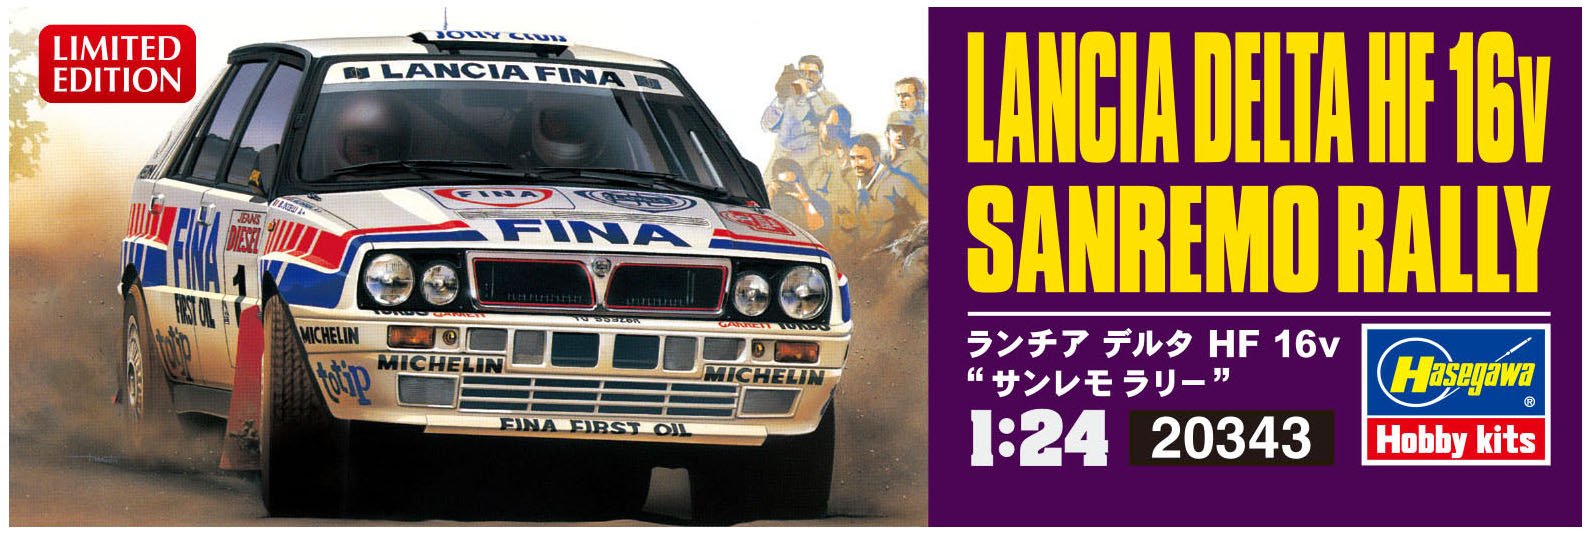 HASEGAWA 20343 Lancia Delta Hf 16V Rallye Sanremo 1/24 Scale Kit